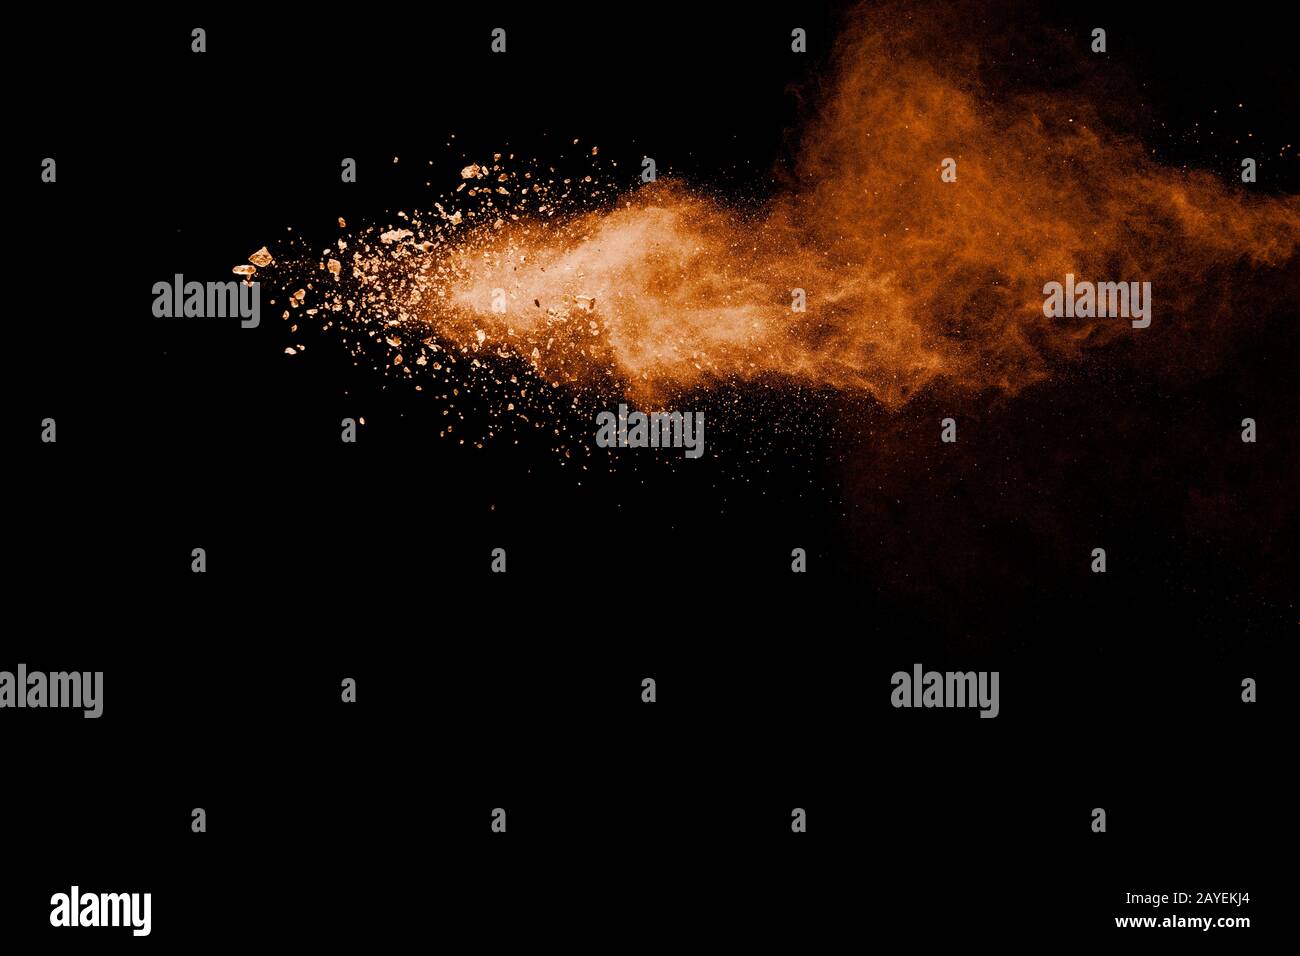 Brown powder explosion on black background. Stock Photo